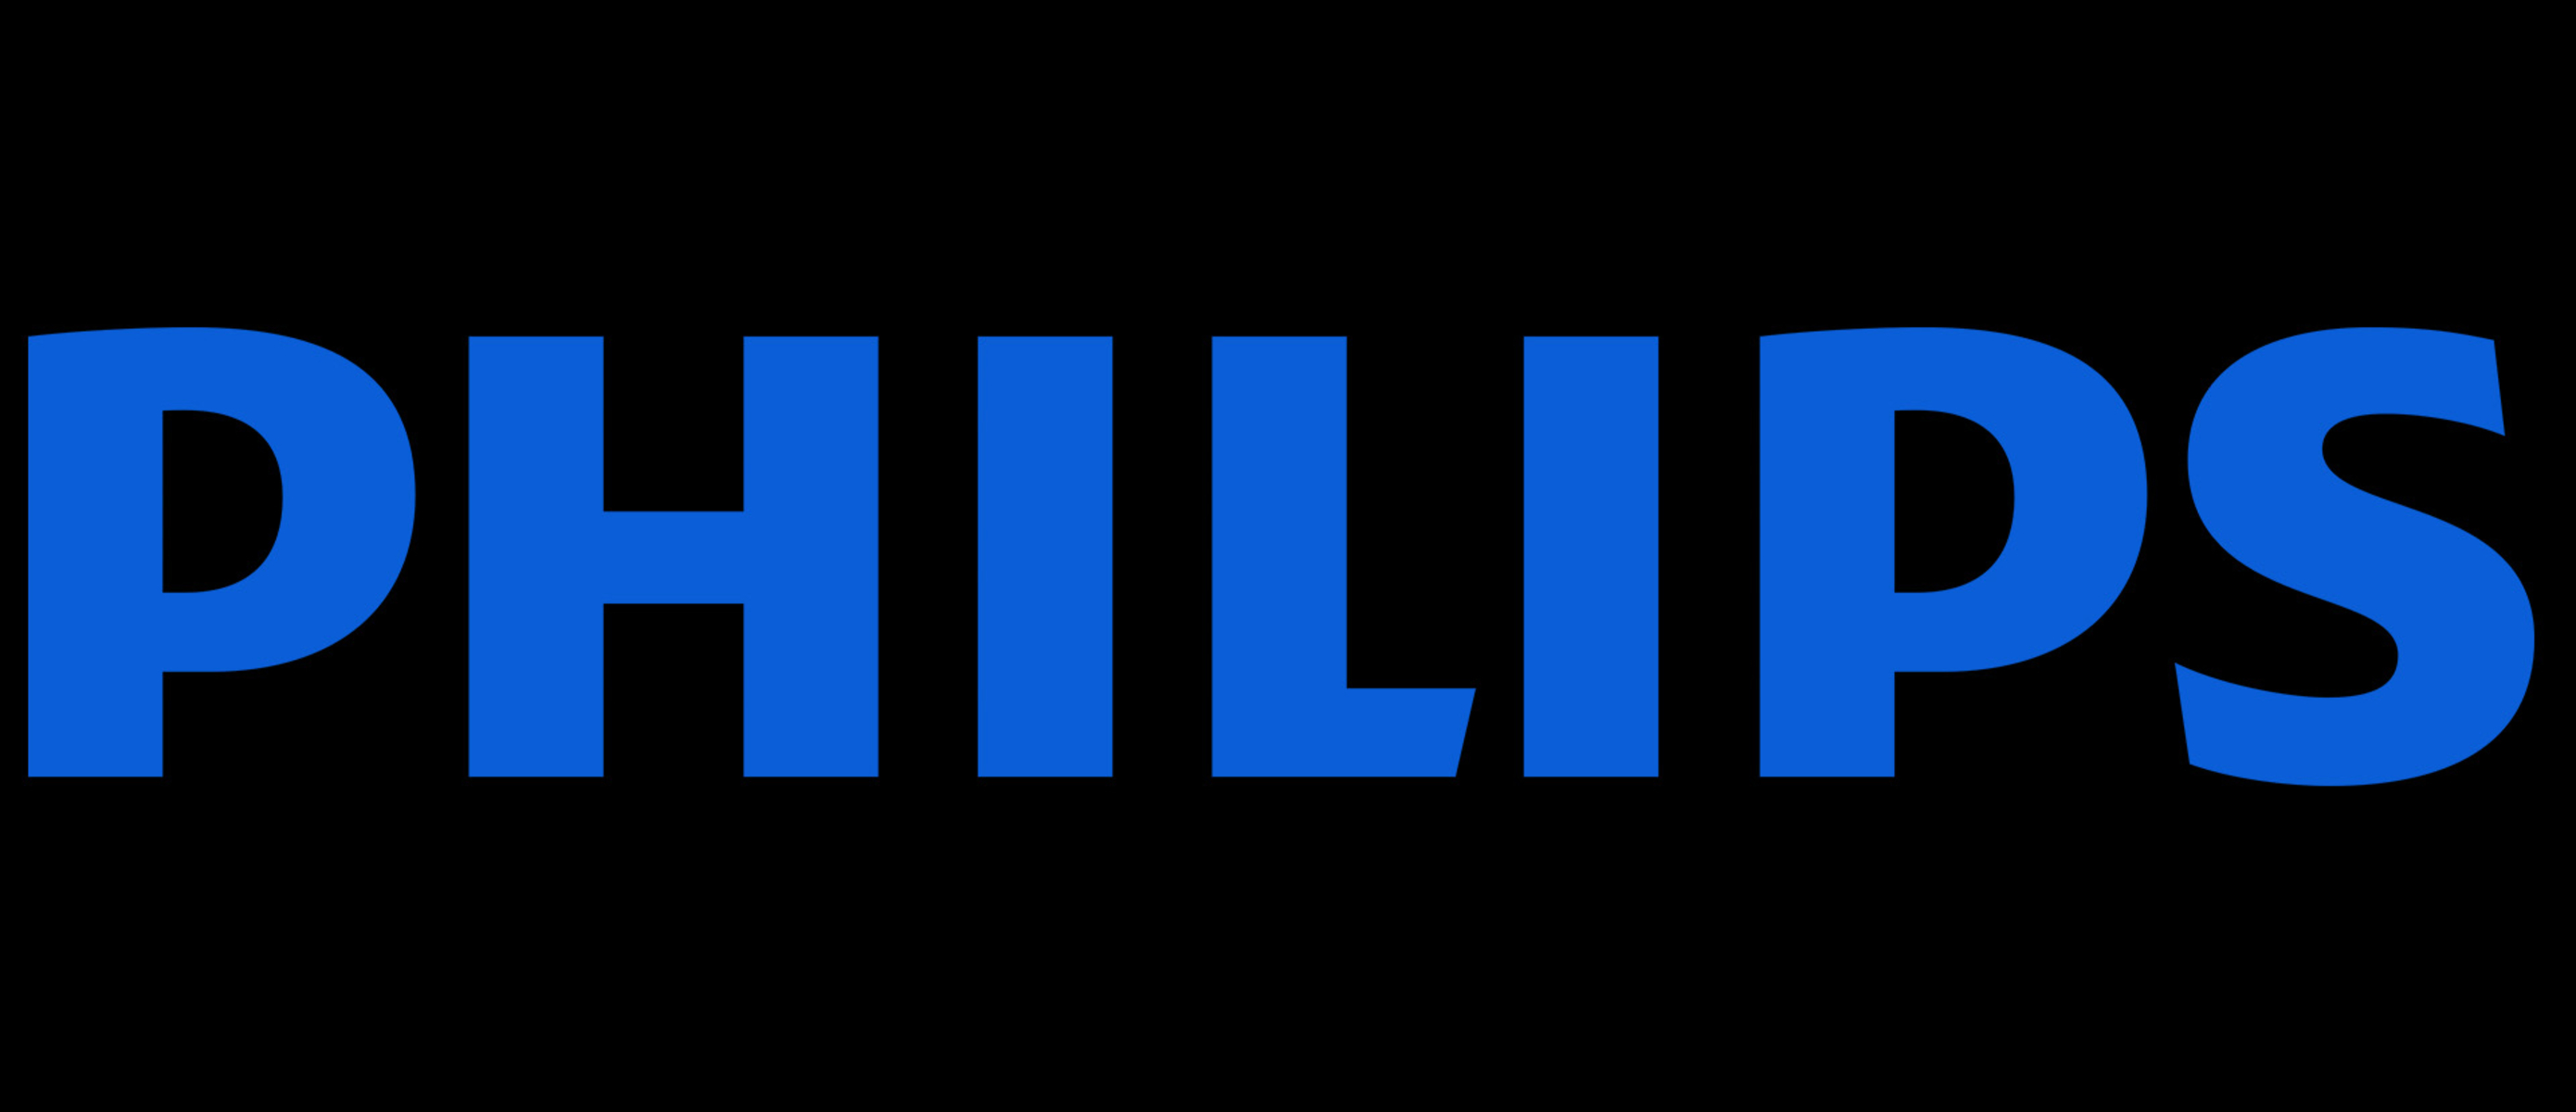 Филипс сайт интернет. Филипс надпись. Philips бренд. Компания Филипс логотип. Заставка Филипс.